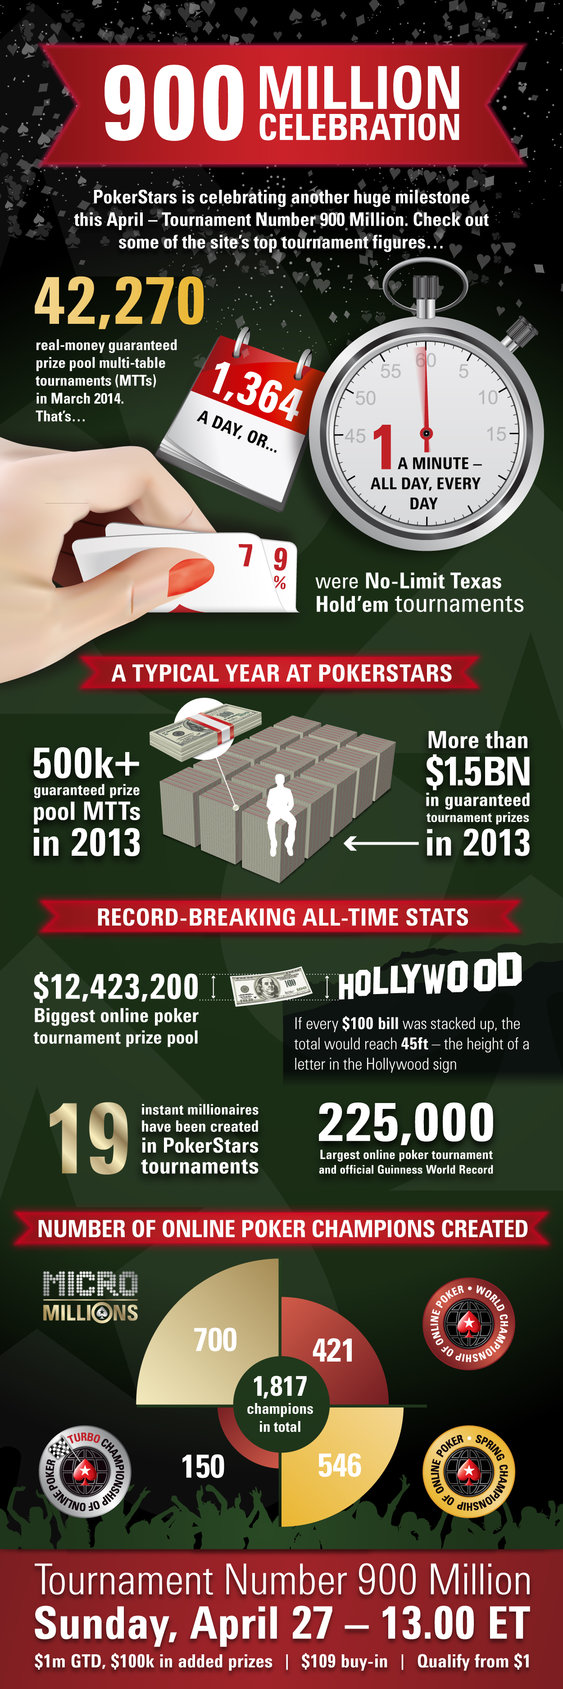 PokerStars 900 Million Celebration Infographic